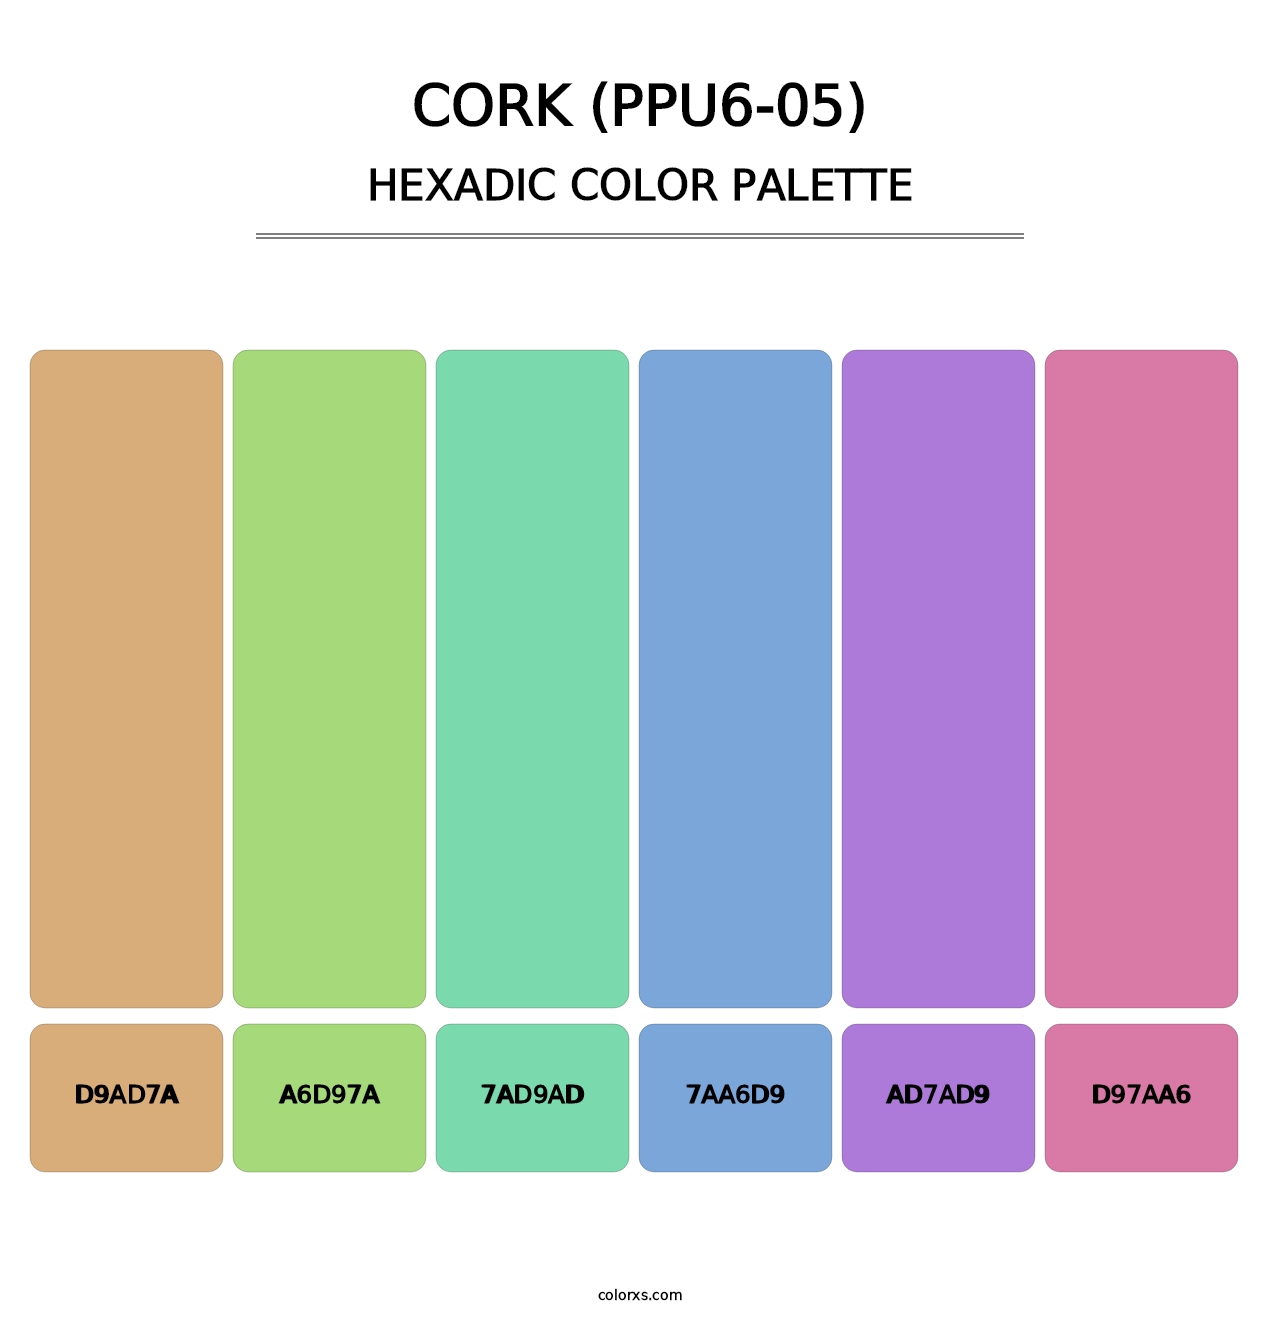 Cork (PPU6-05) - Hexadic Color Palette